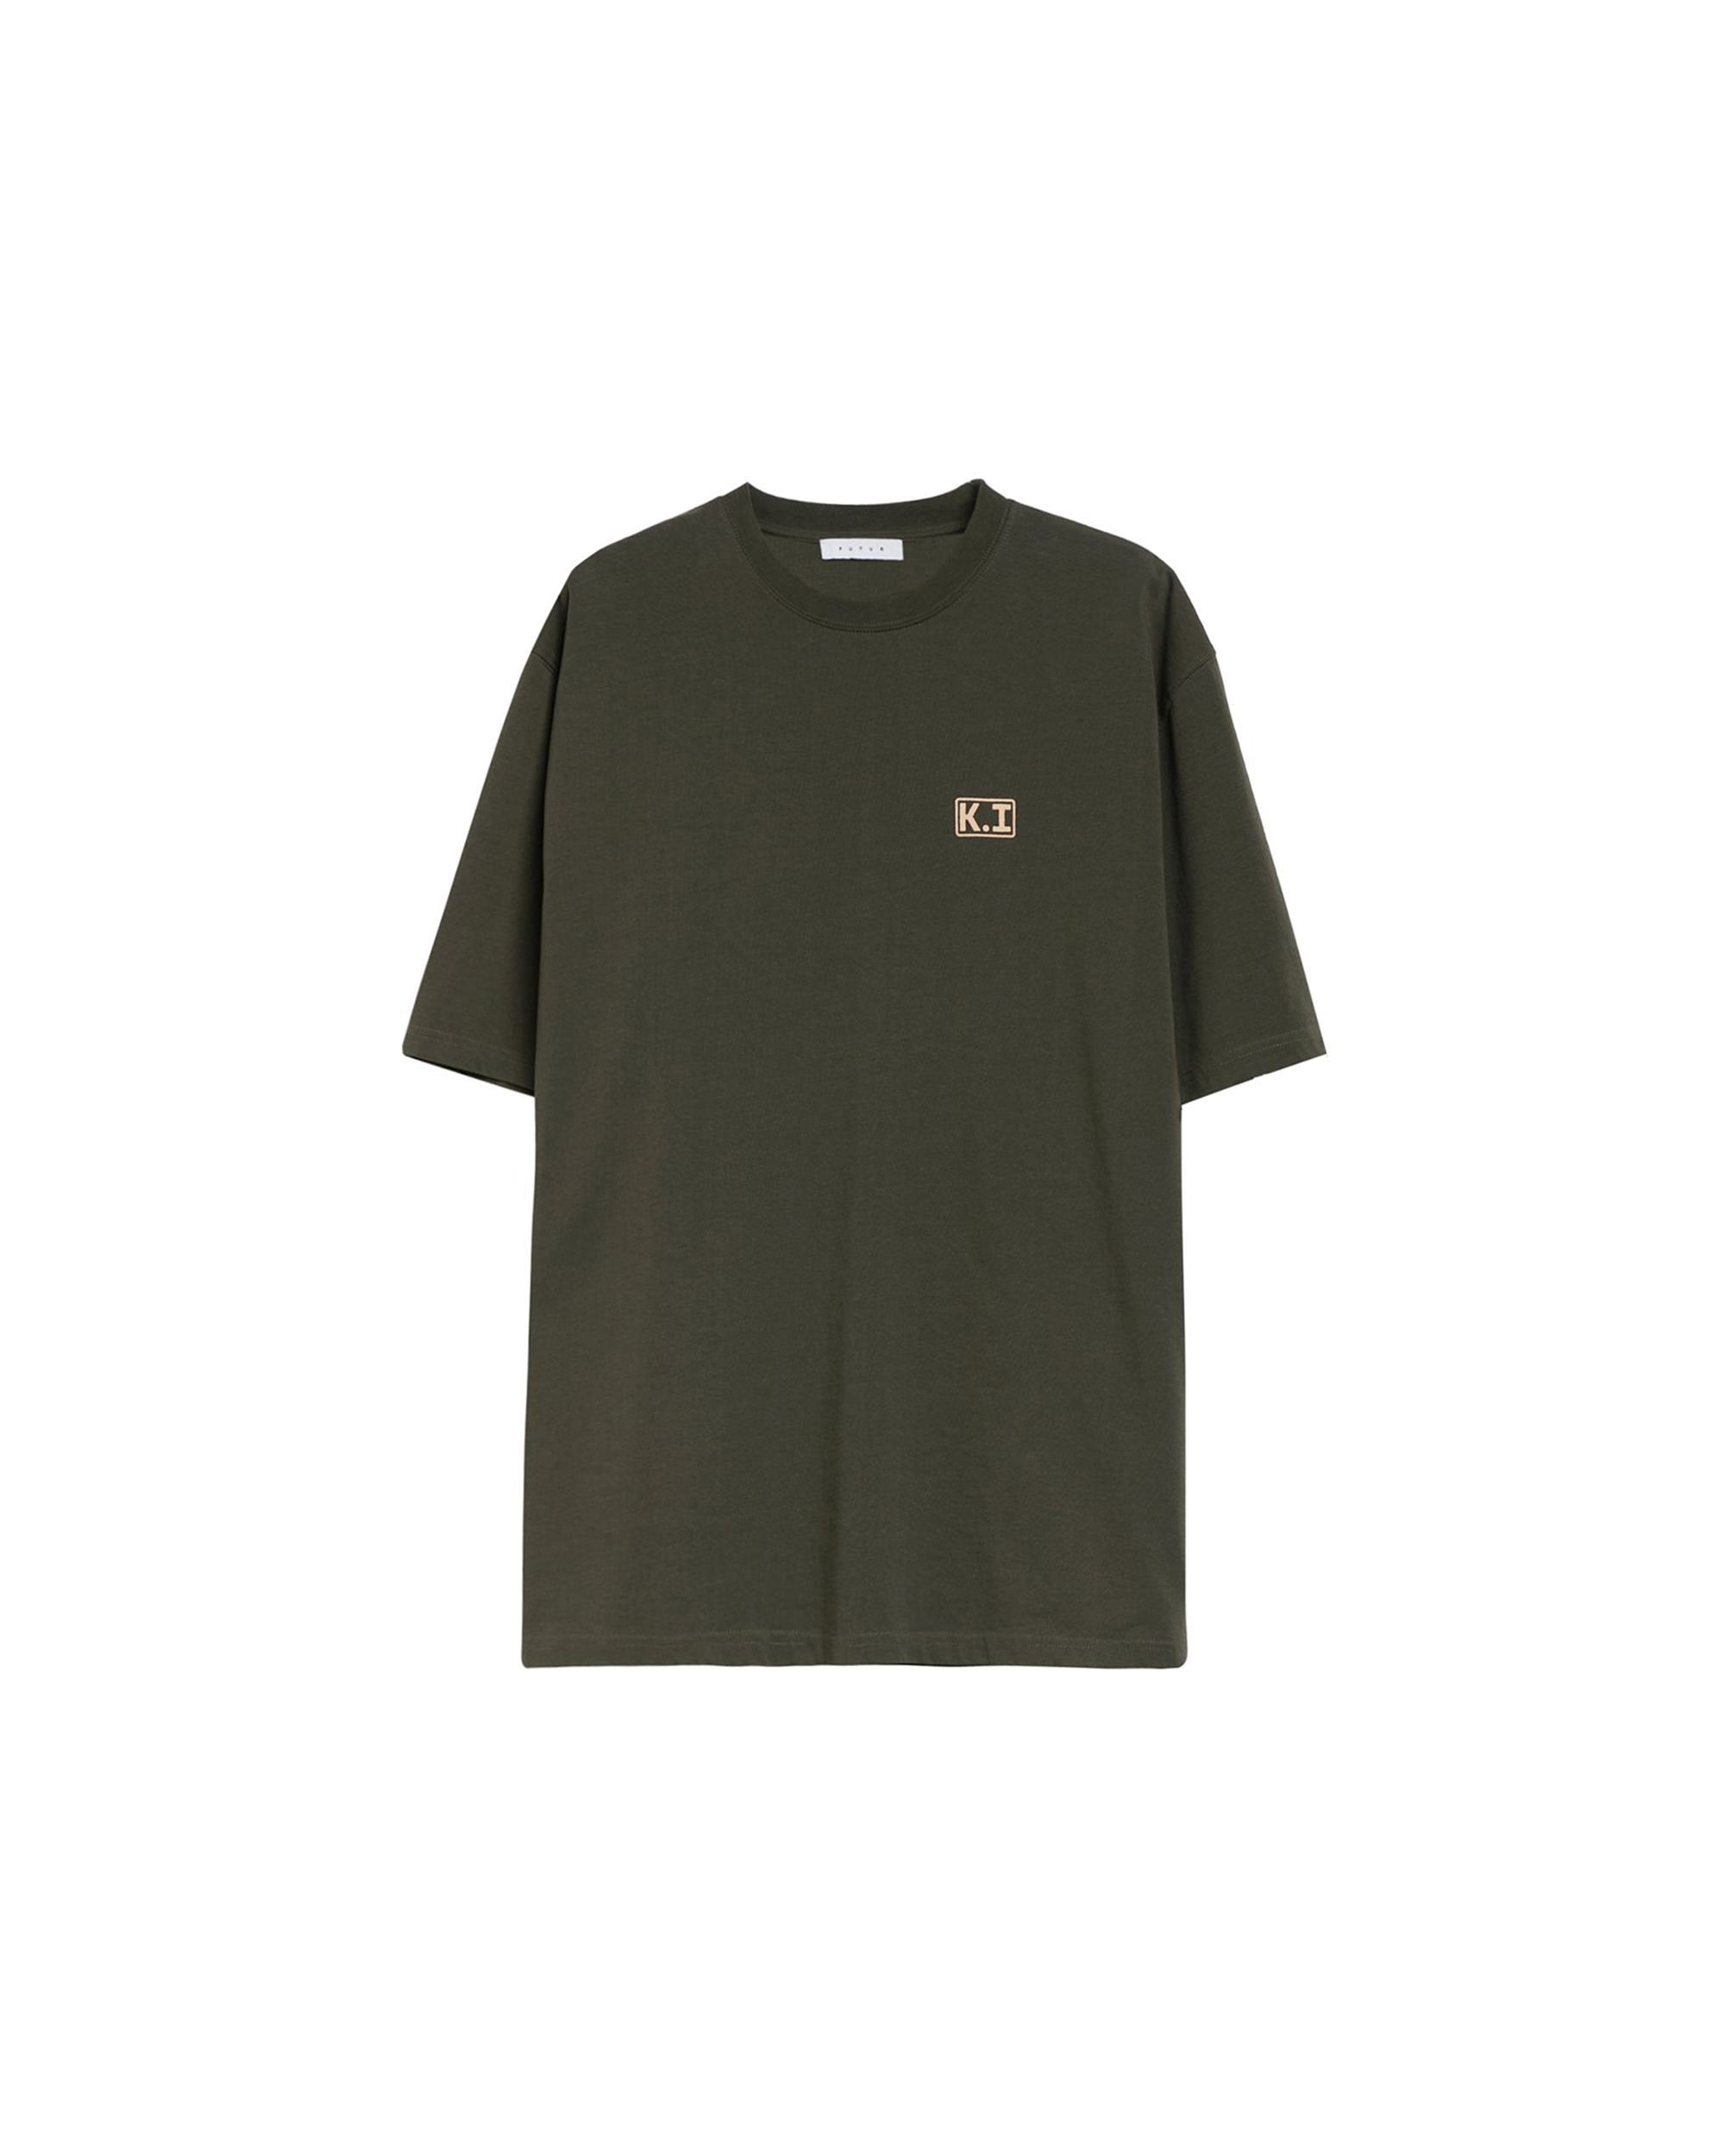 Kingsley T-Shirt - Army Green